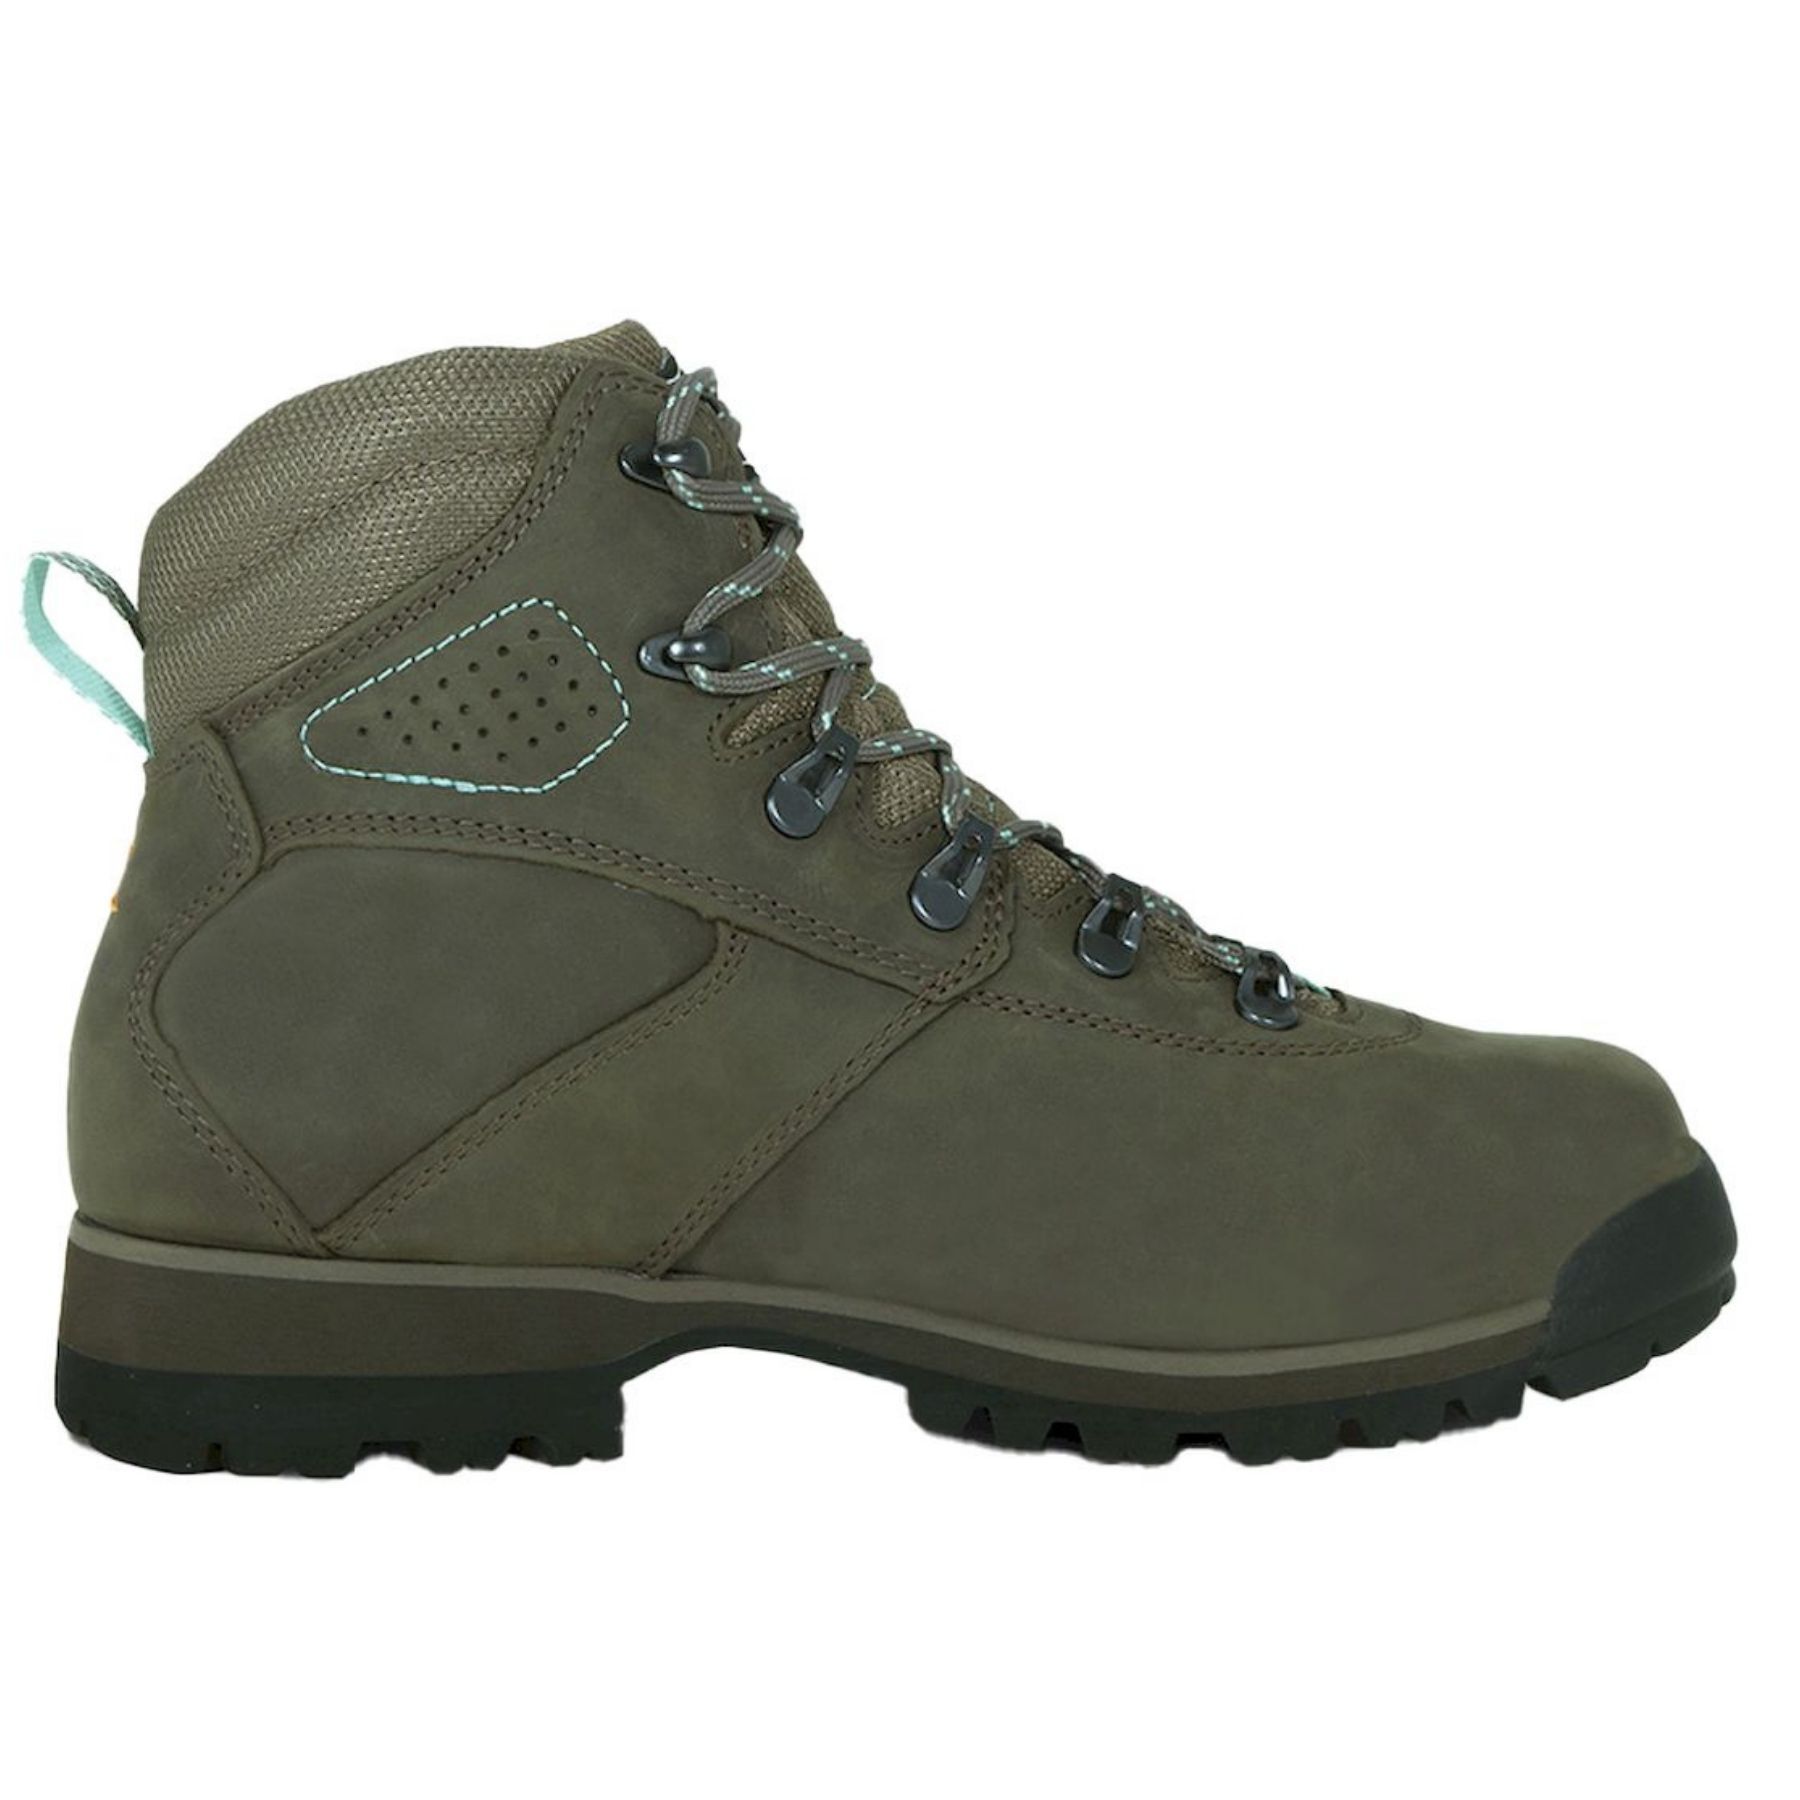 Garmont Pordoi Nubuck GTX - Hiking boots - Women's